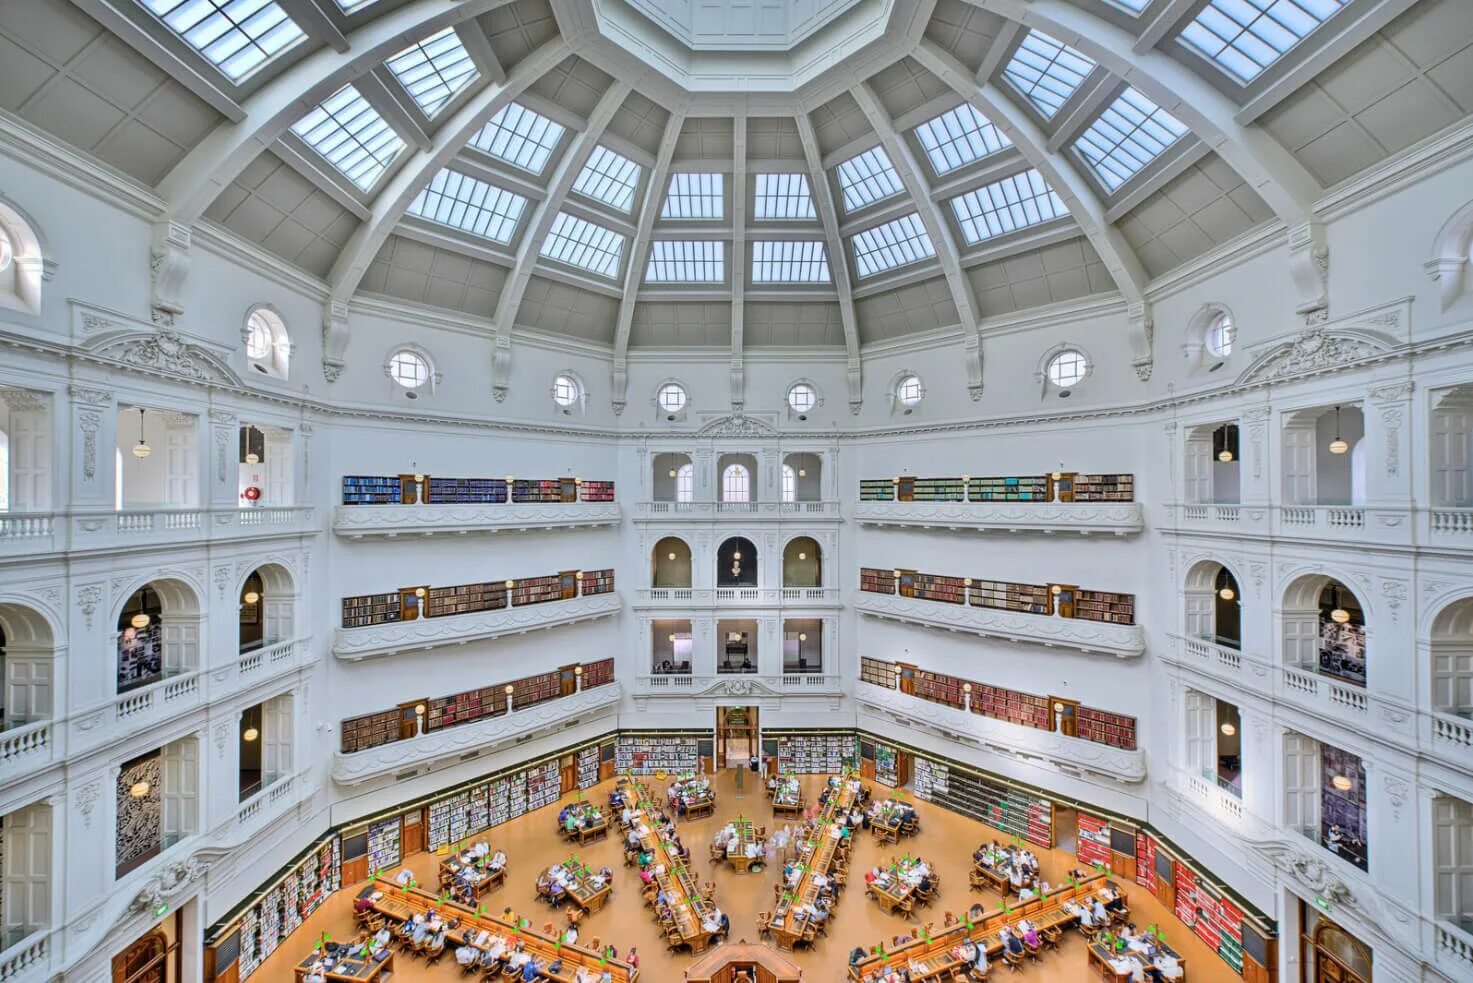 Публичная библиотека. Публичная библиотека Нью-Йорка. Публичные библиотеки США. Публичные библиотеки в Мумбаи. State library